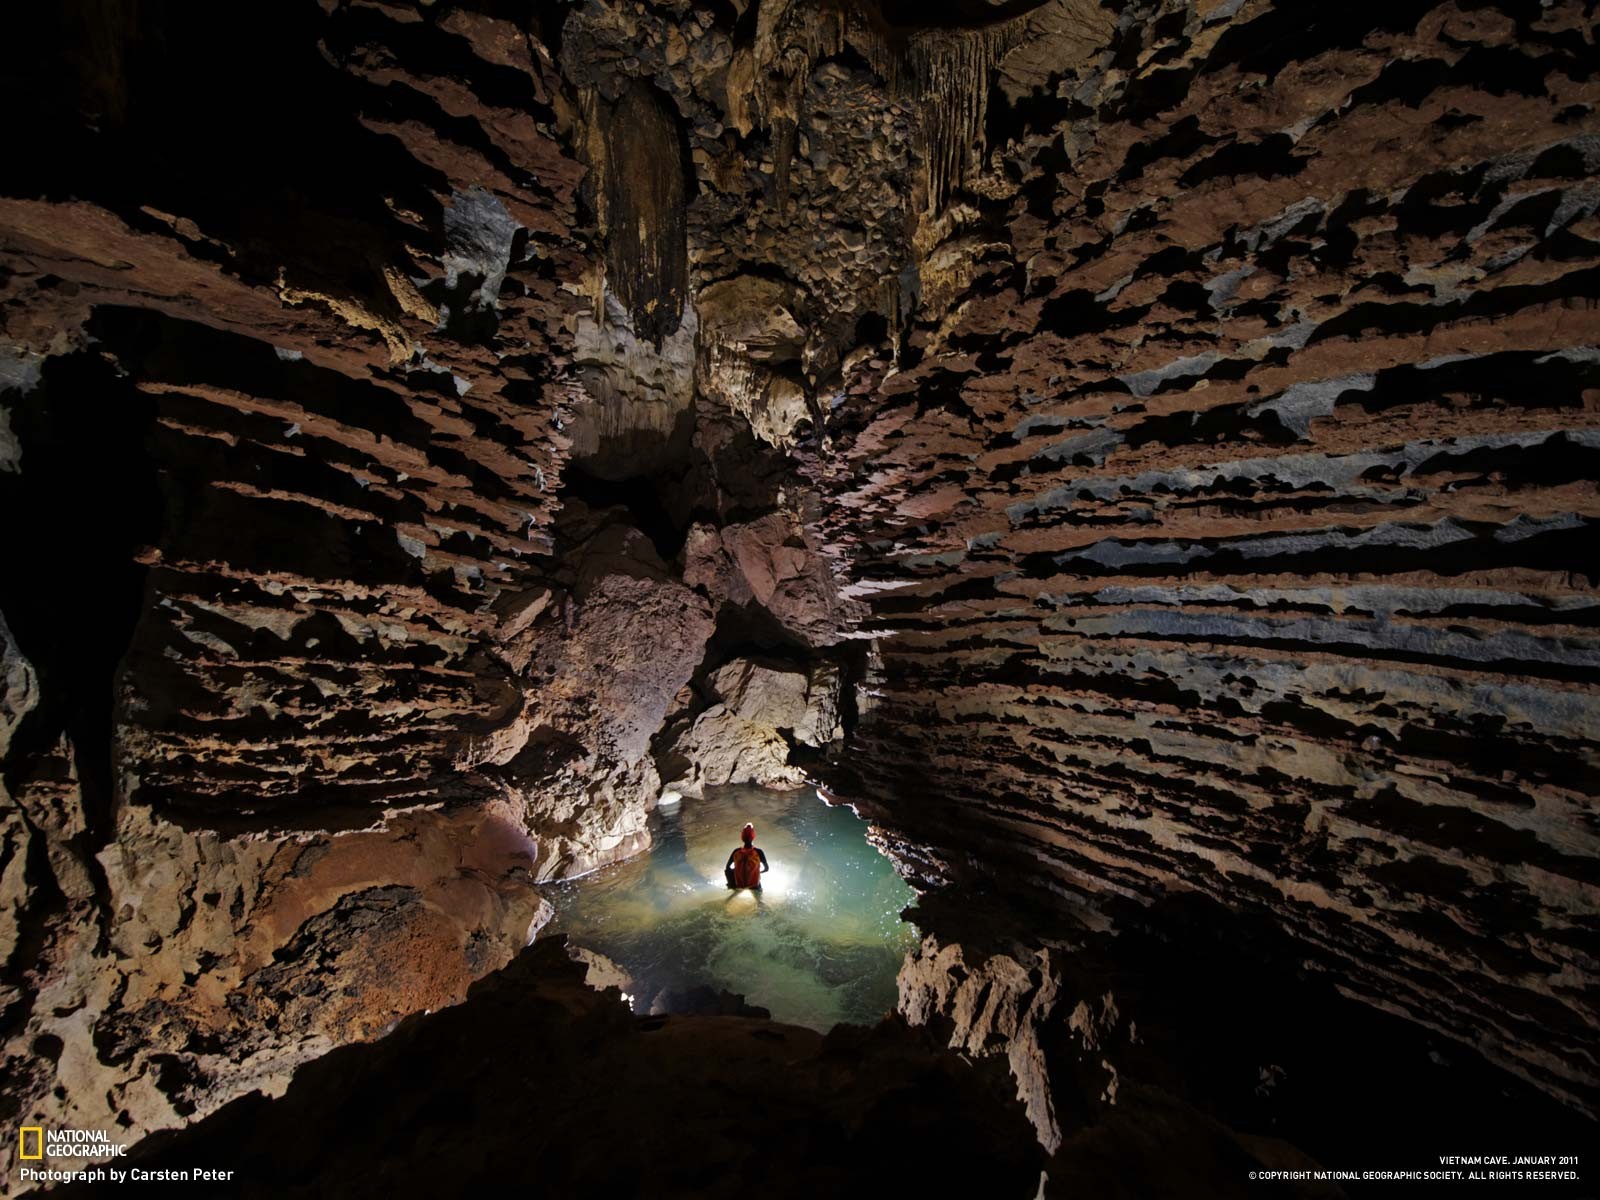 General 1600x1200 National Geographic cave nature 2011 (Year) Vietnam Asia underground water